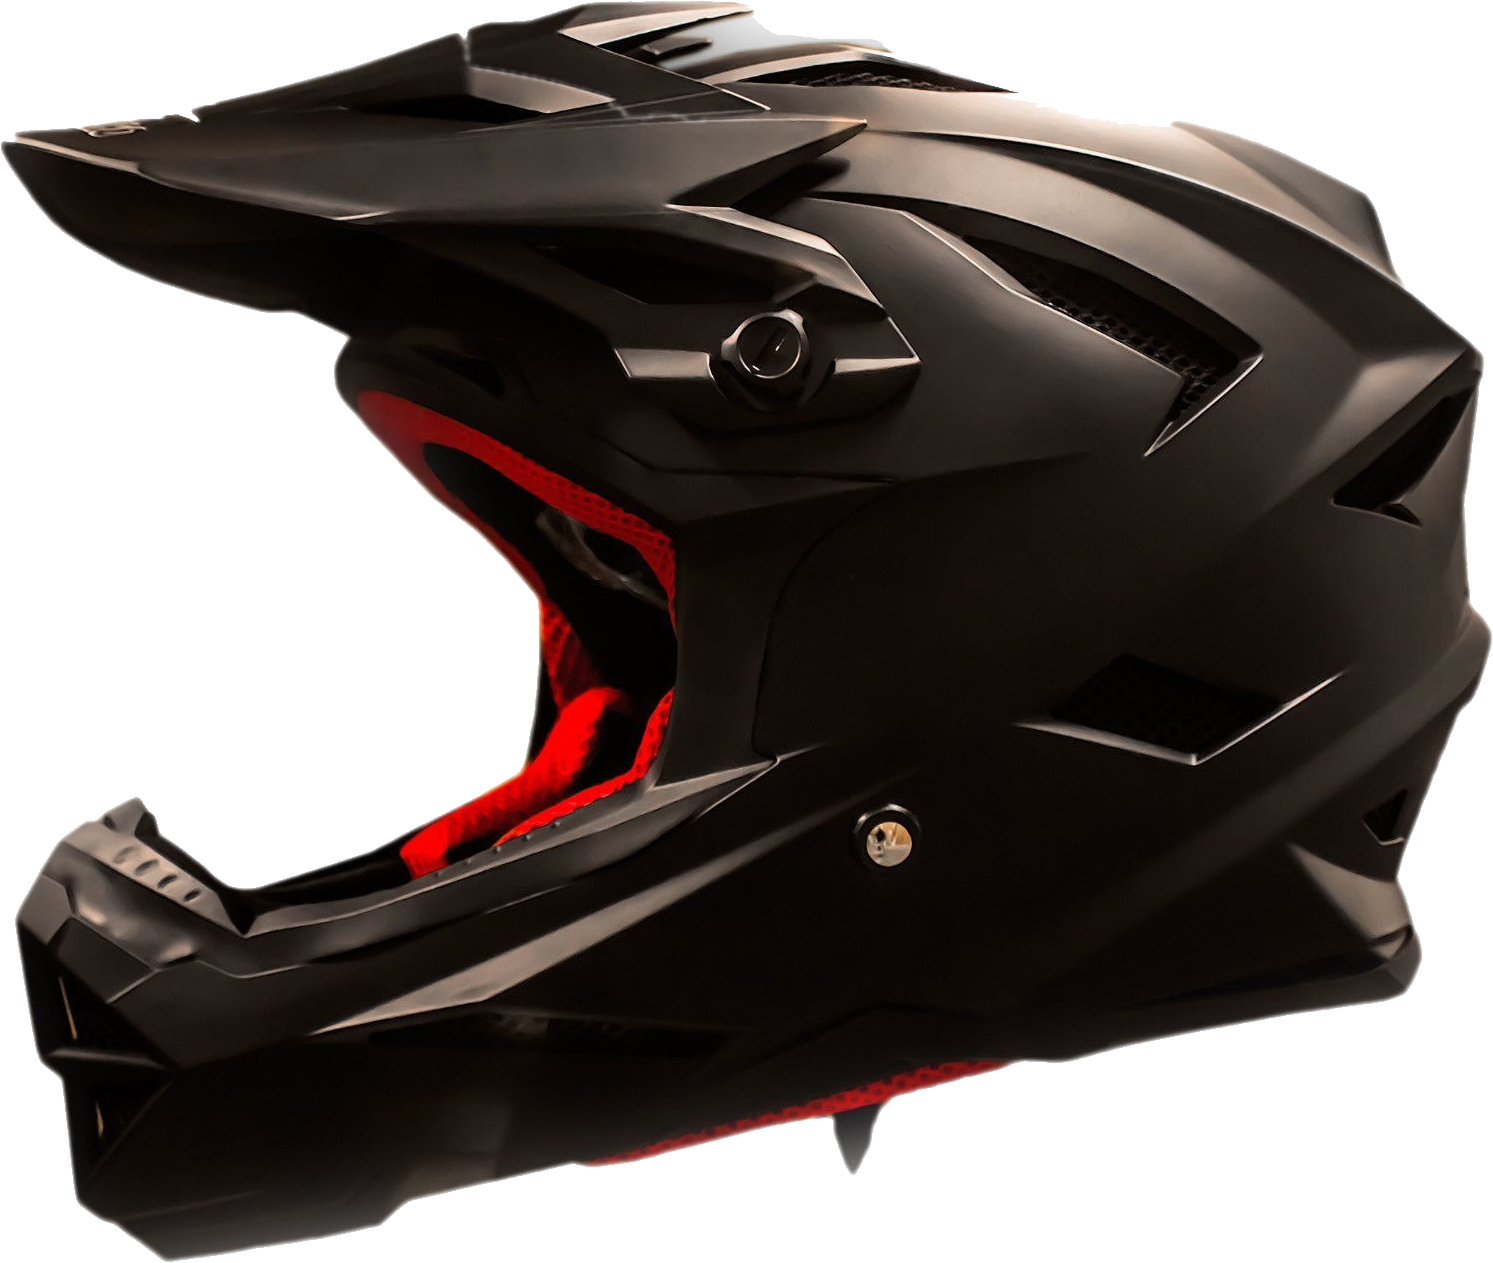 Bicycle Helmet Png Image - Motorcycle Helmet, Transparent background PNG HD thumbnail